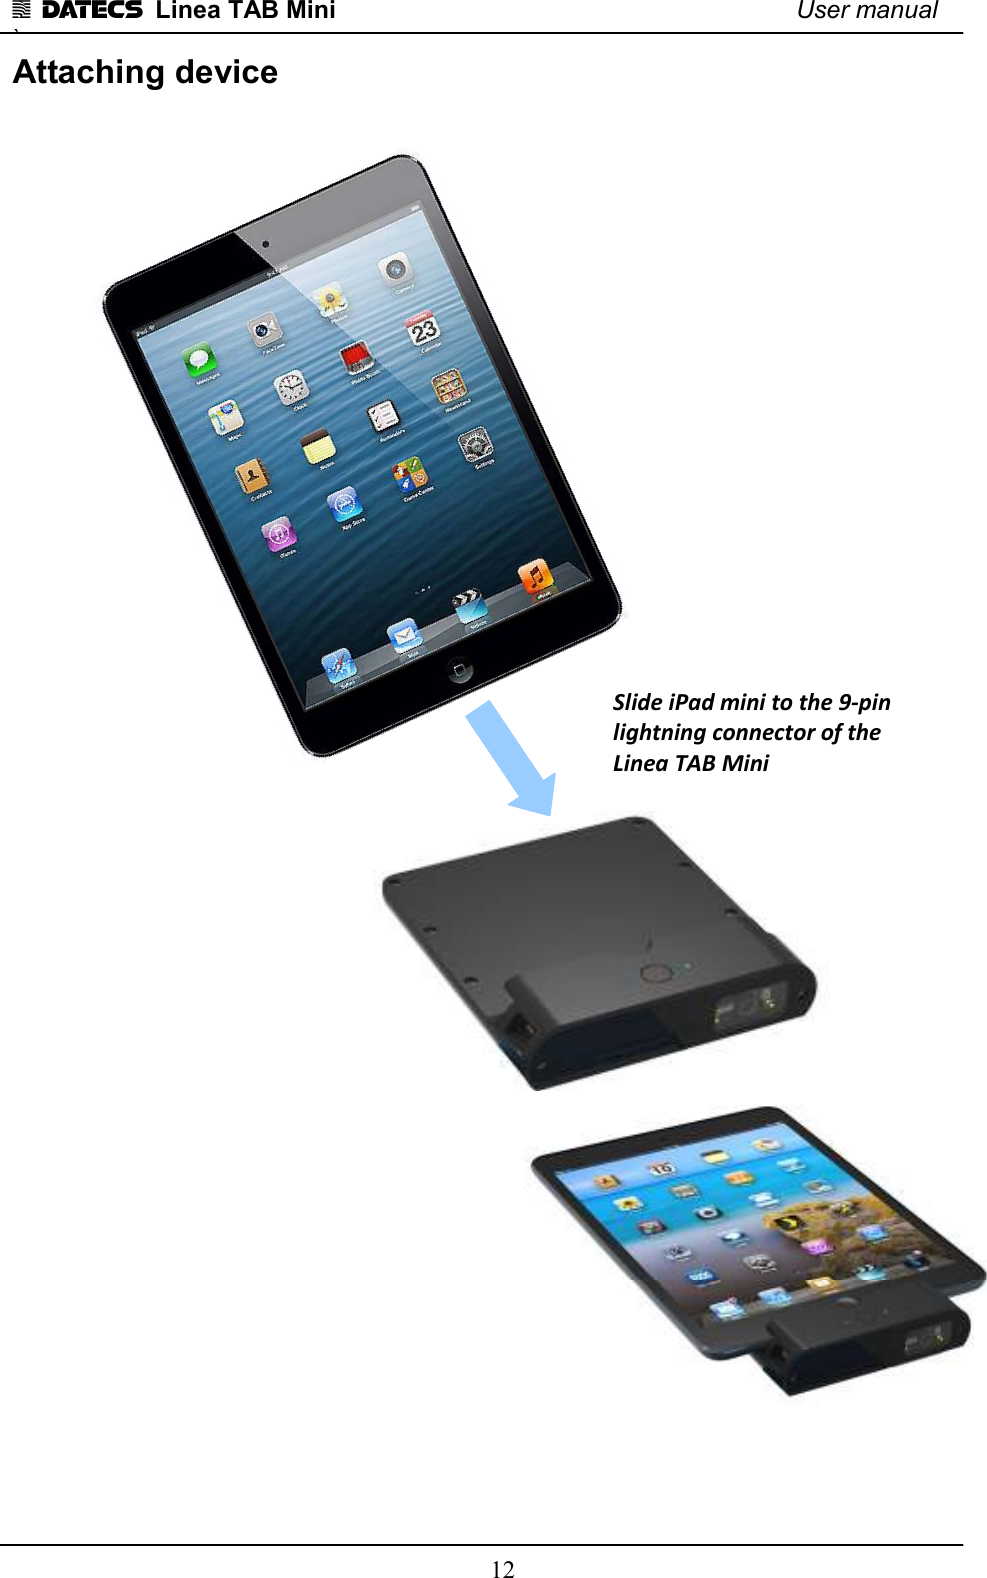 1 DATECS  Linea TAB Mini    User manual `    12 Attaching device   Slide iPad mini to the 9-pin lightning connector of the Linea TAB Mini  